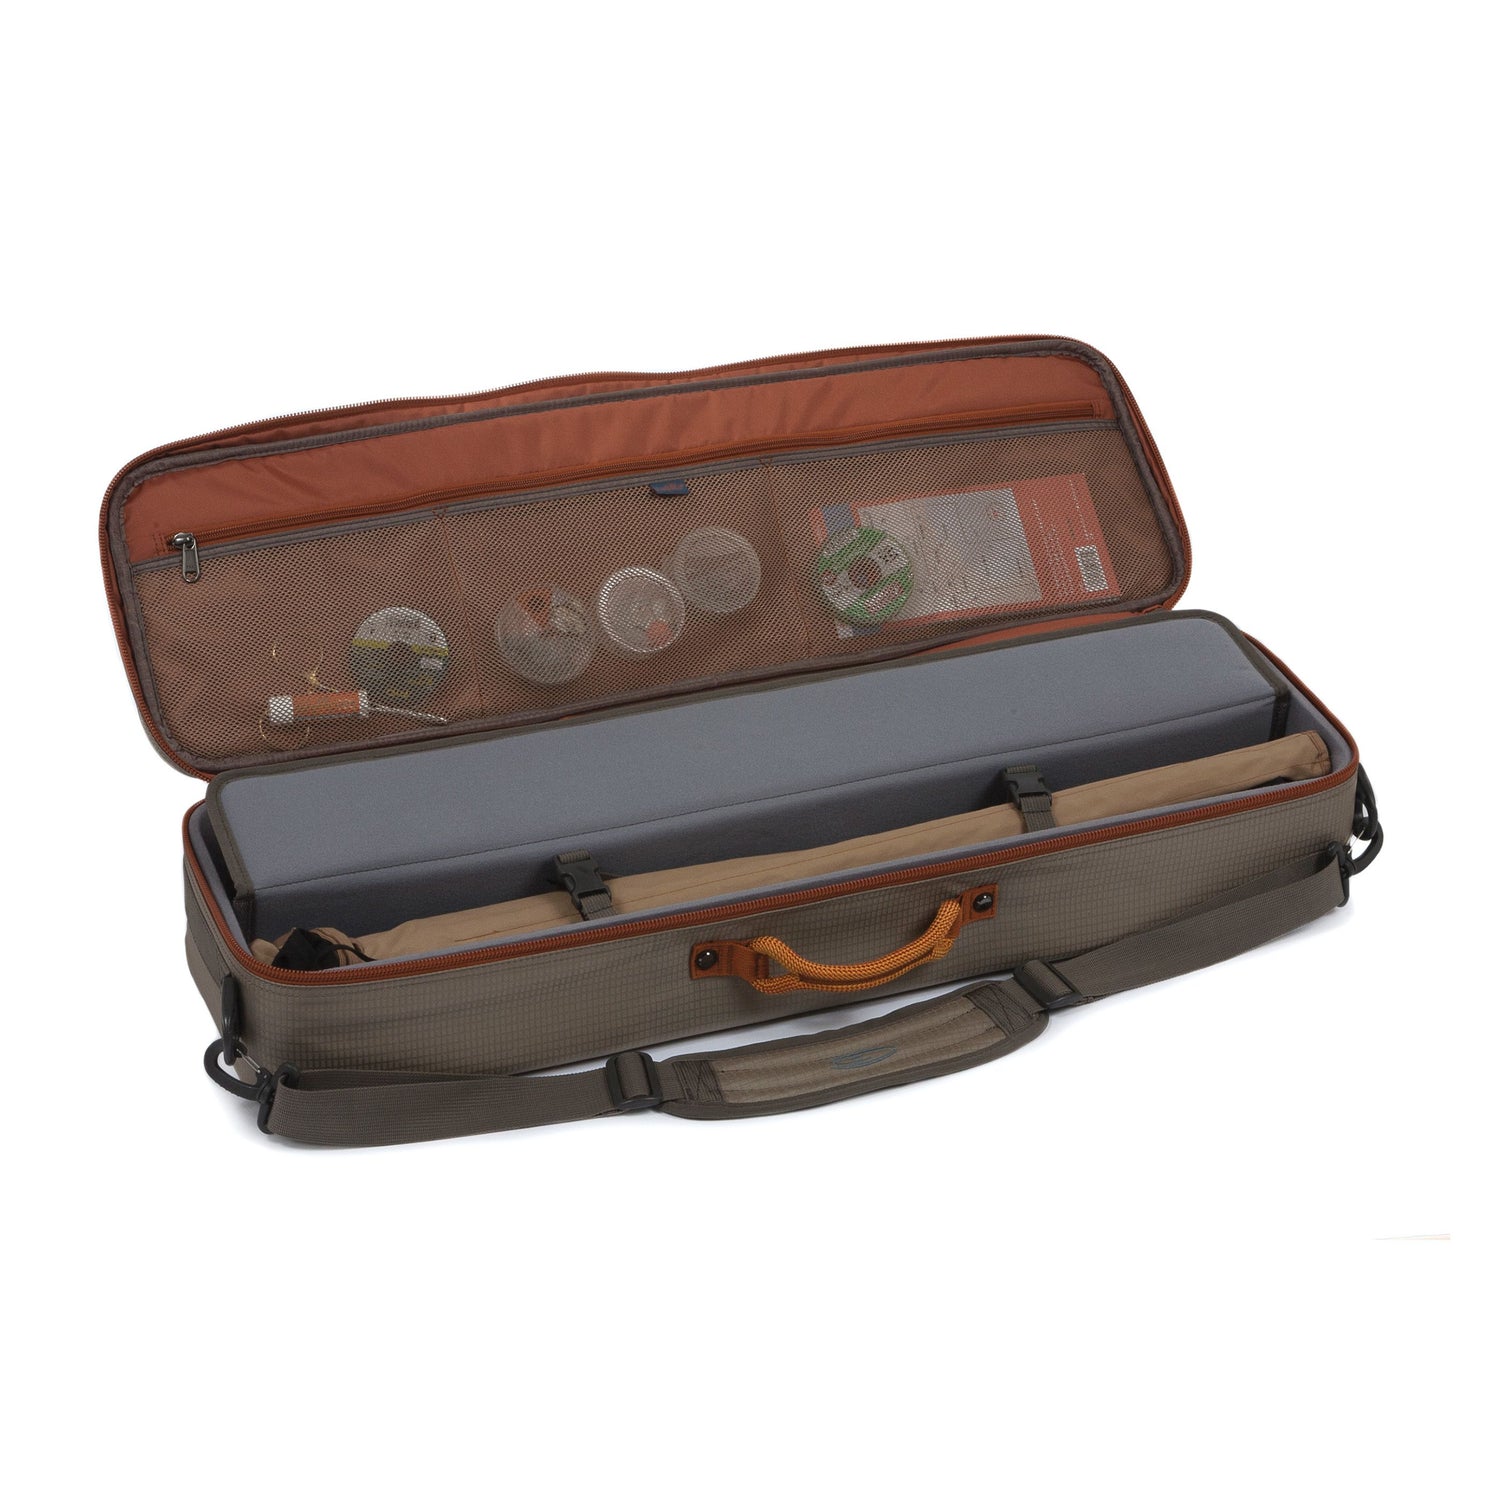  Granite Dakota Carry-on Rod & Reel Case - Cache